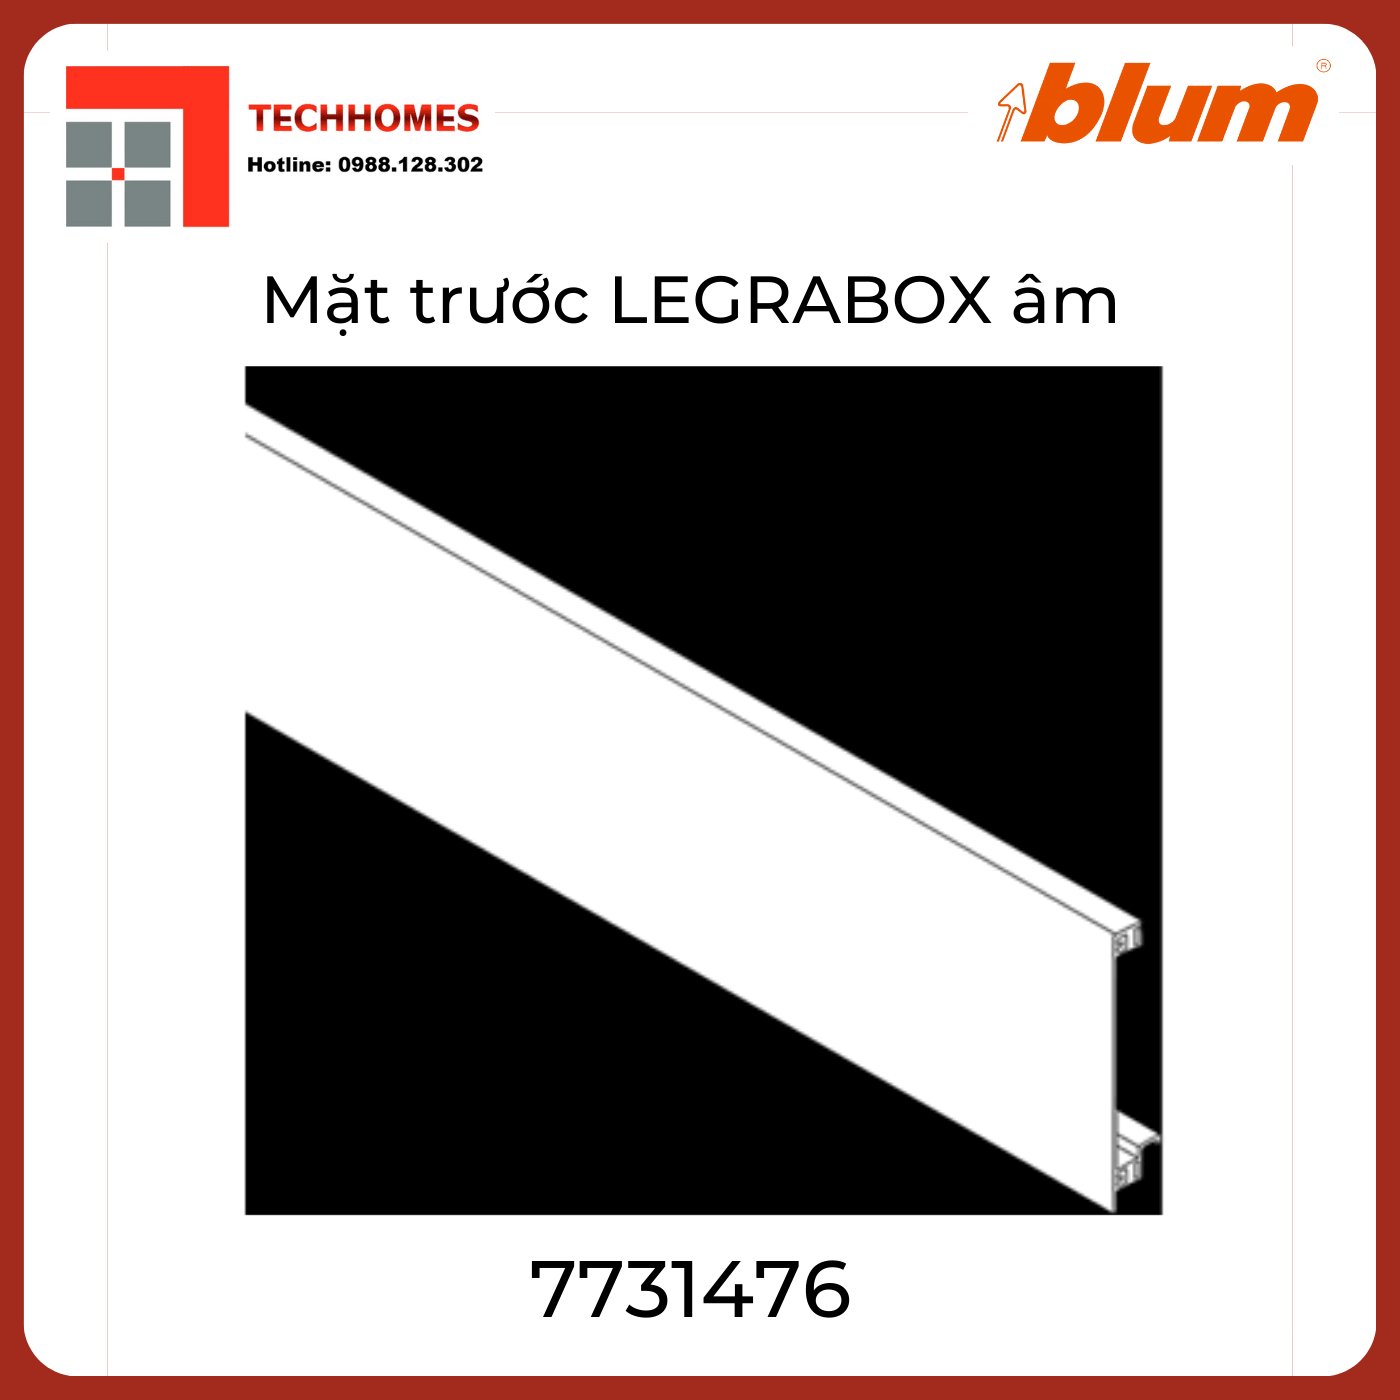 Mặt trước LEGRABOX Blum ZV7.1043C01 7731476